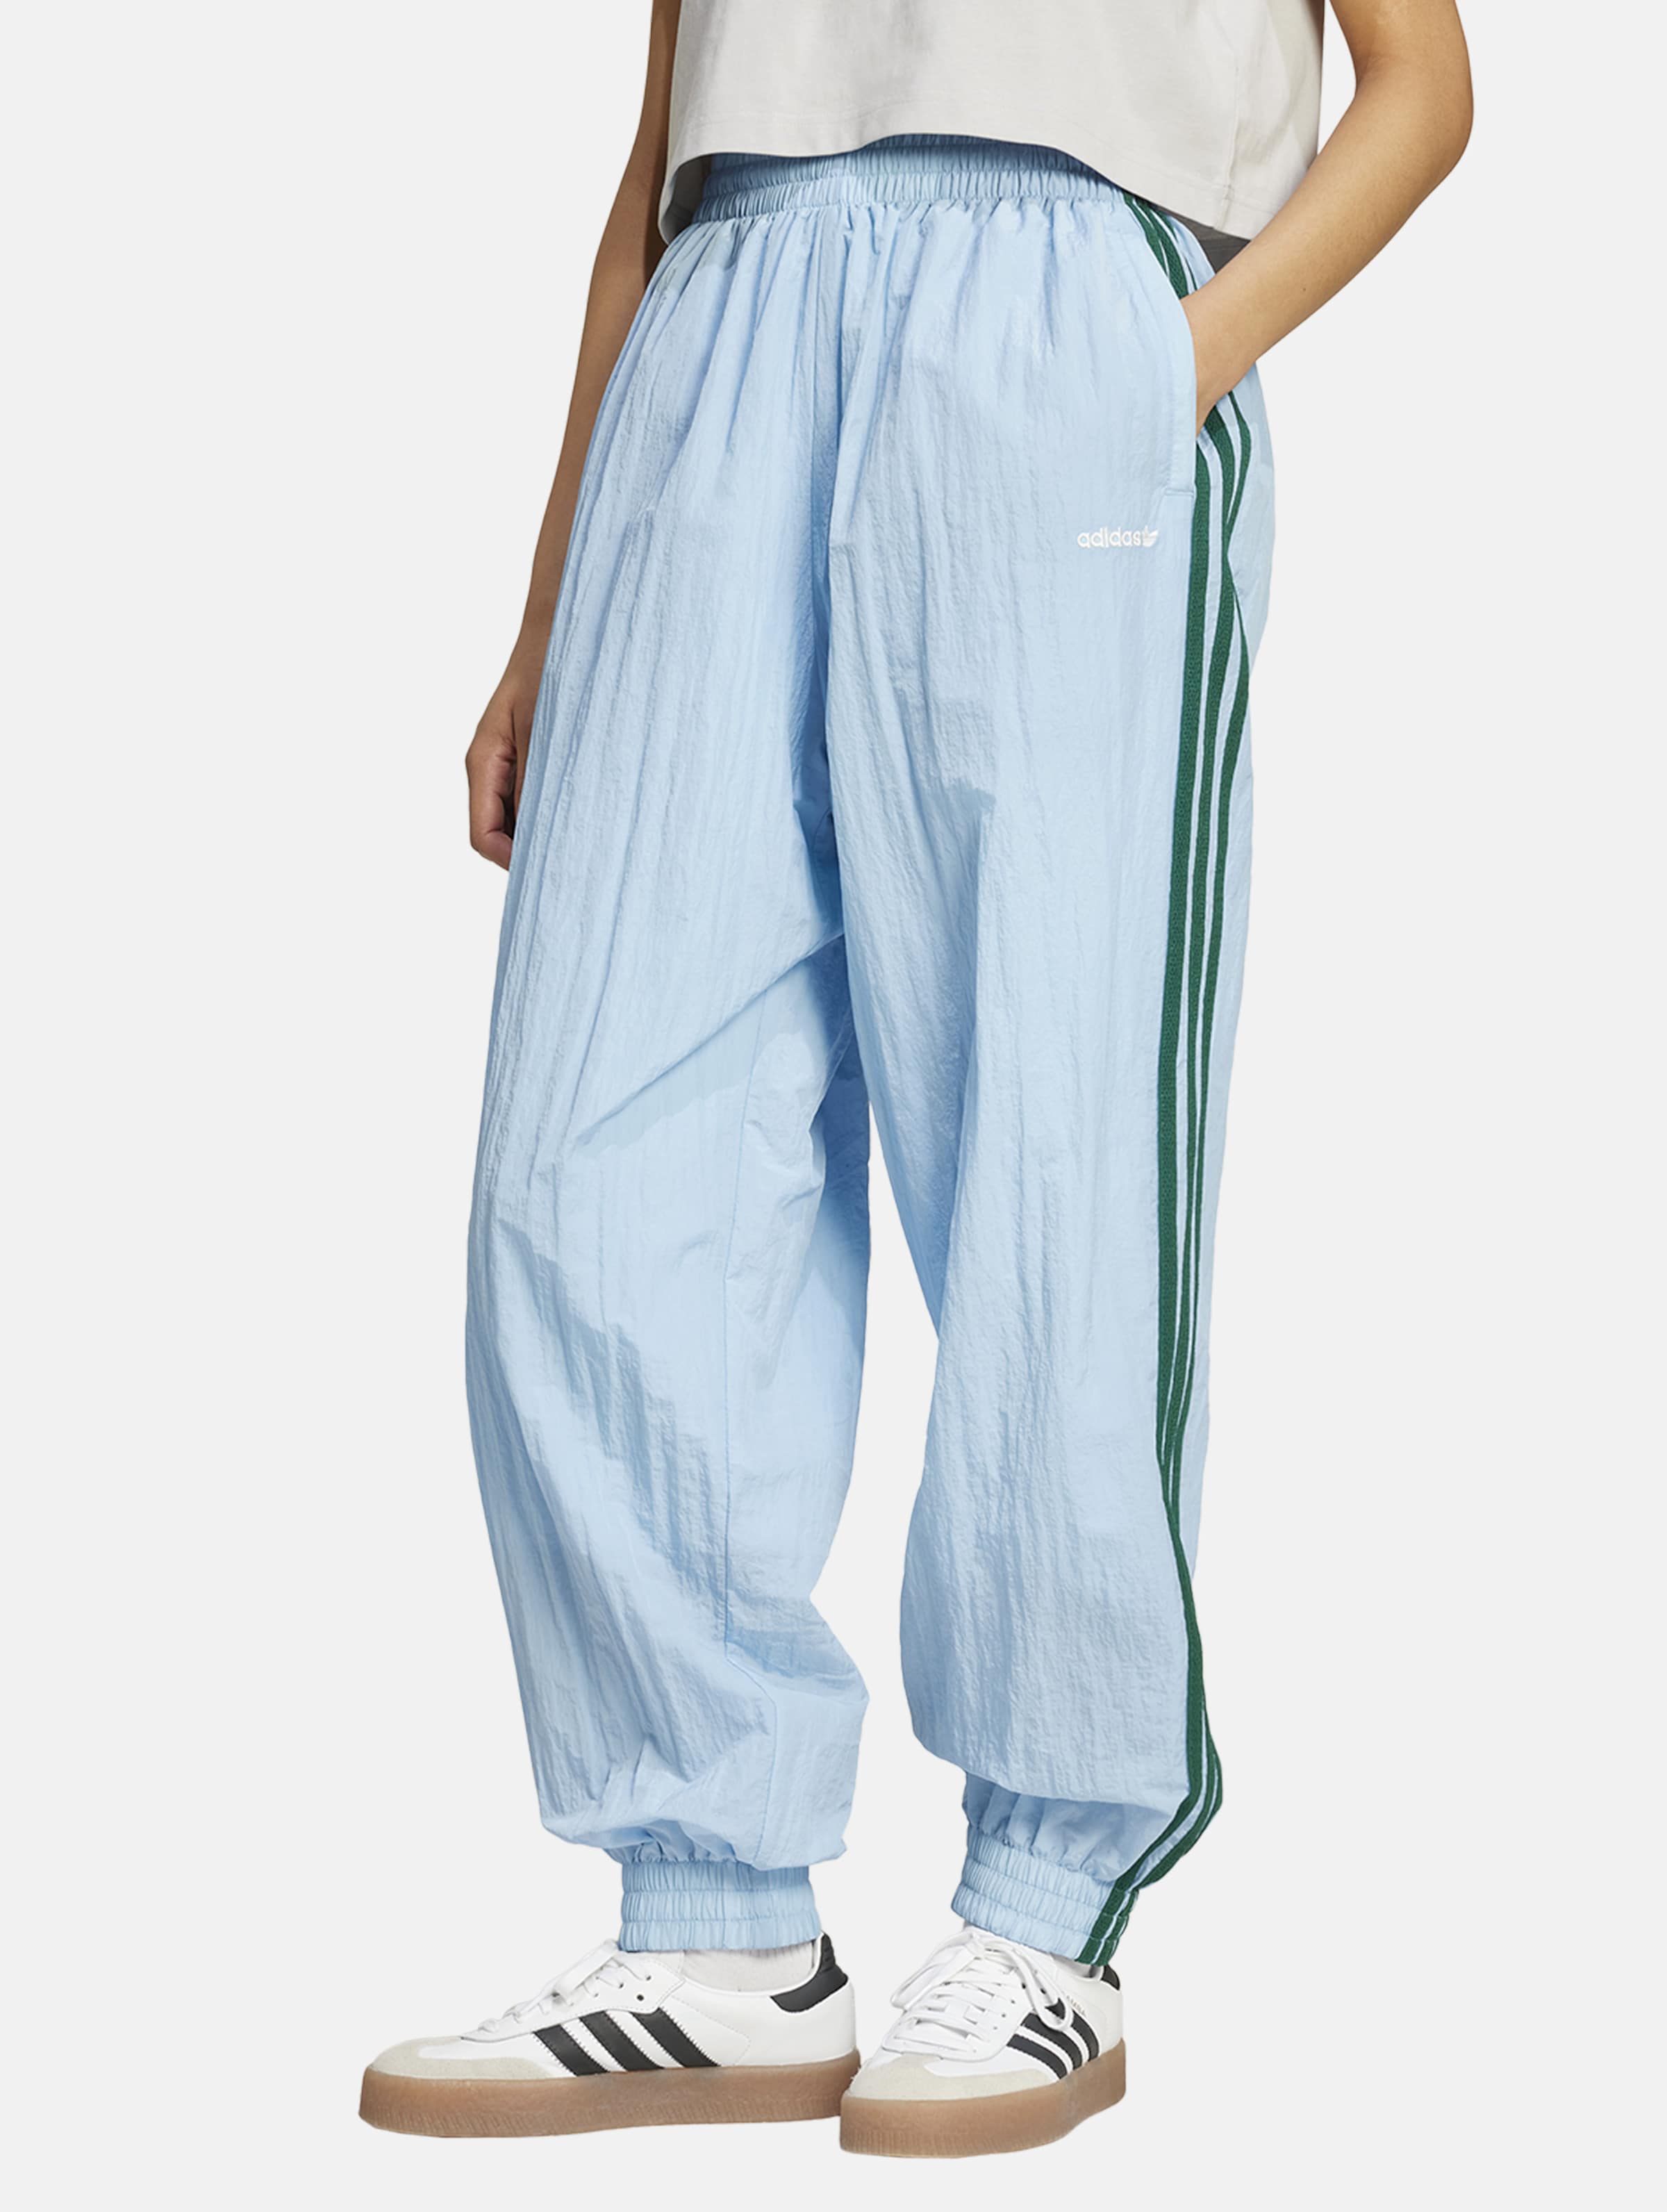 adidas Originals originals Jogginghosen Frauen,Unisex op kleur blauw, Maat XL